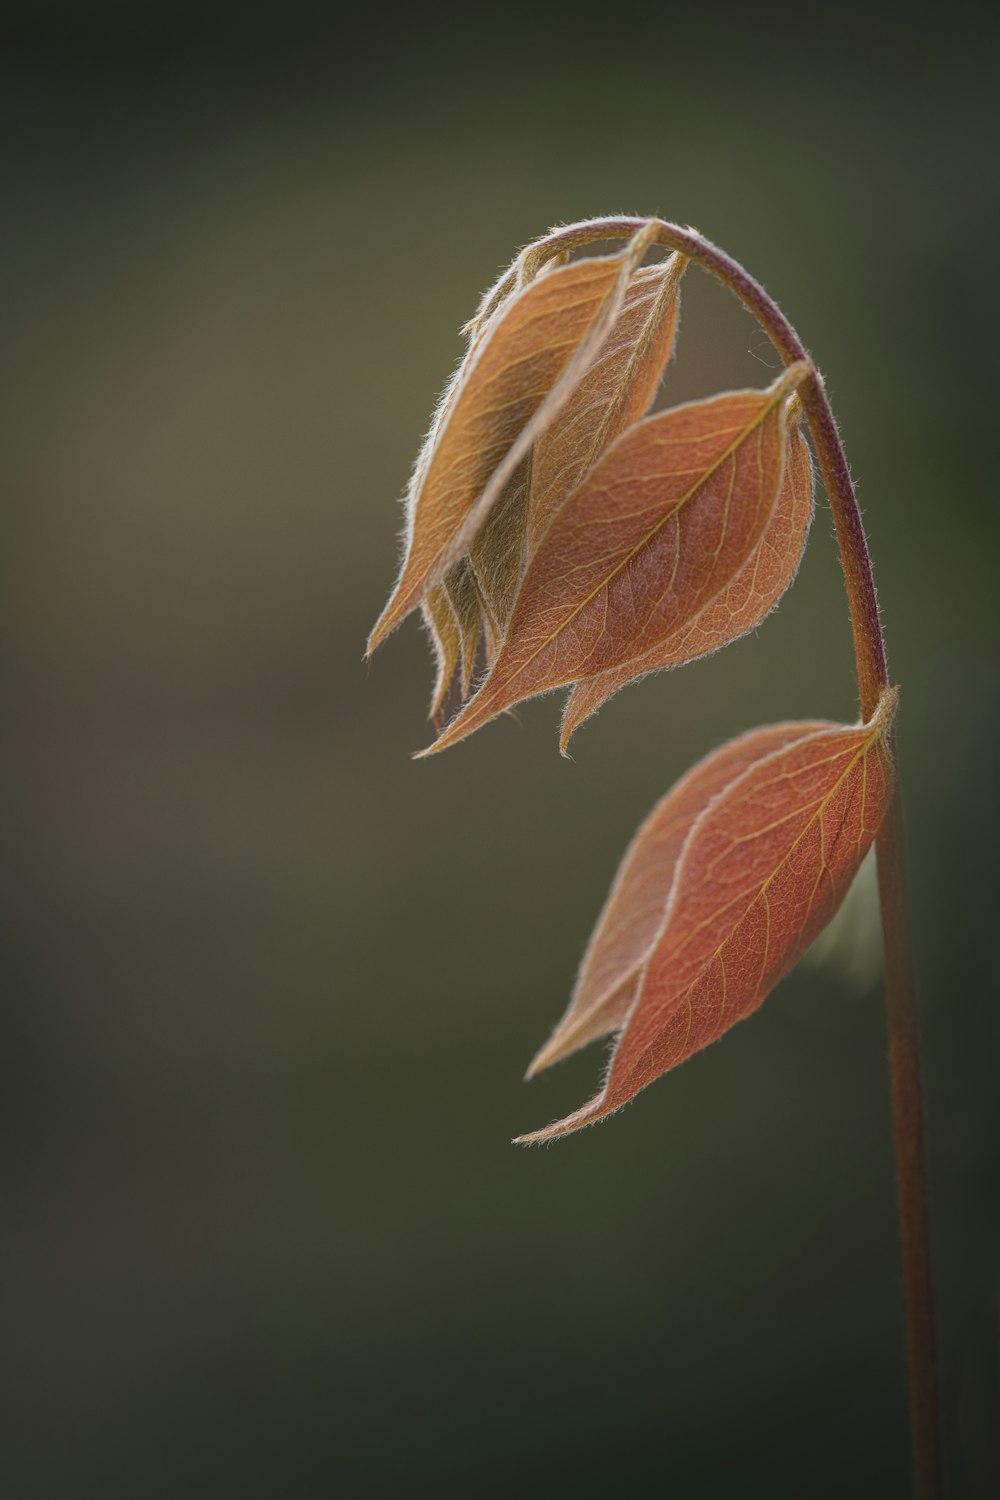 a close up of a single leaf on a plant